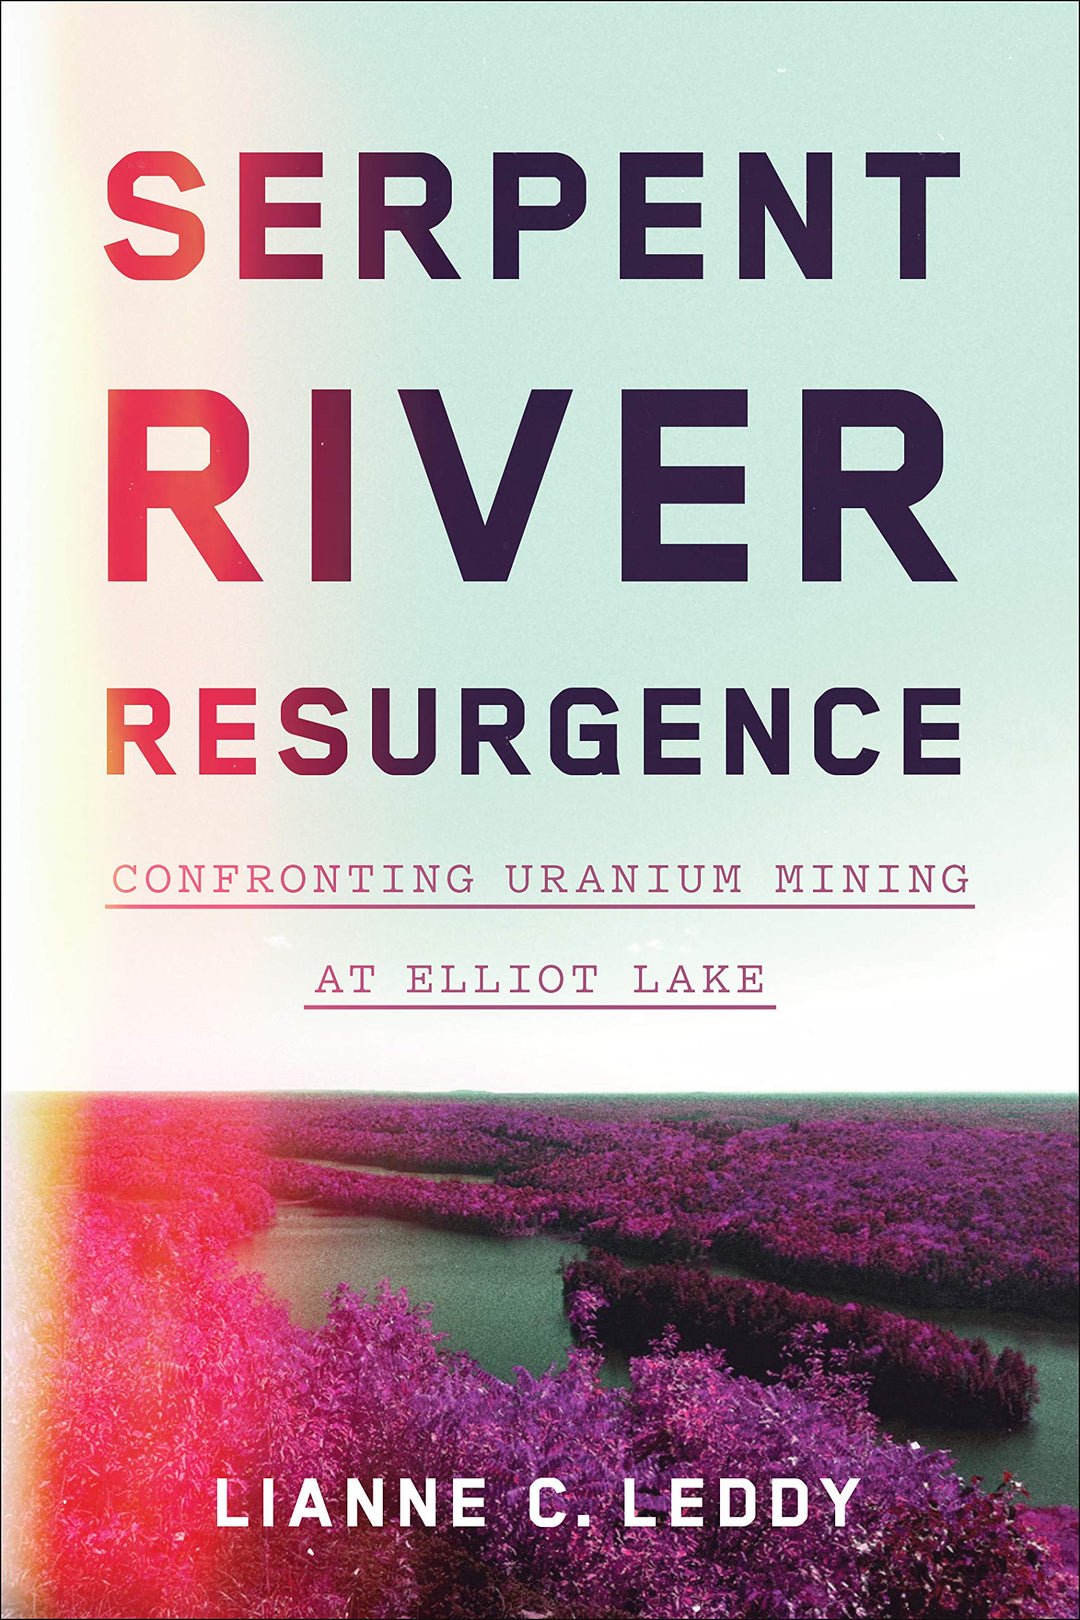 Serpent River Resurgence: Confronting Uranium Mining at Elliot Lake  by Lianne C. Leddy